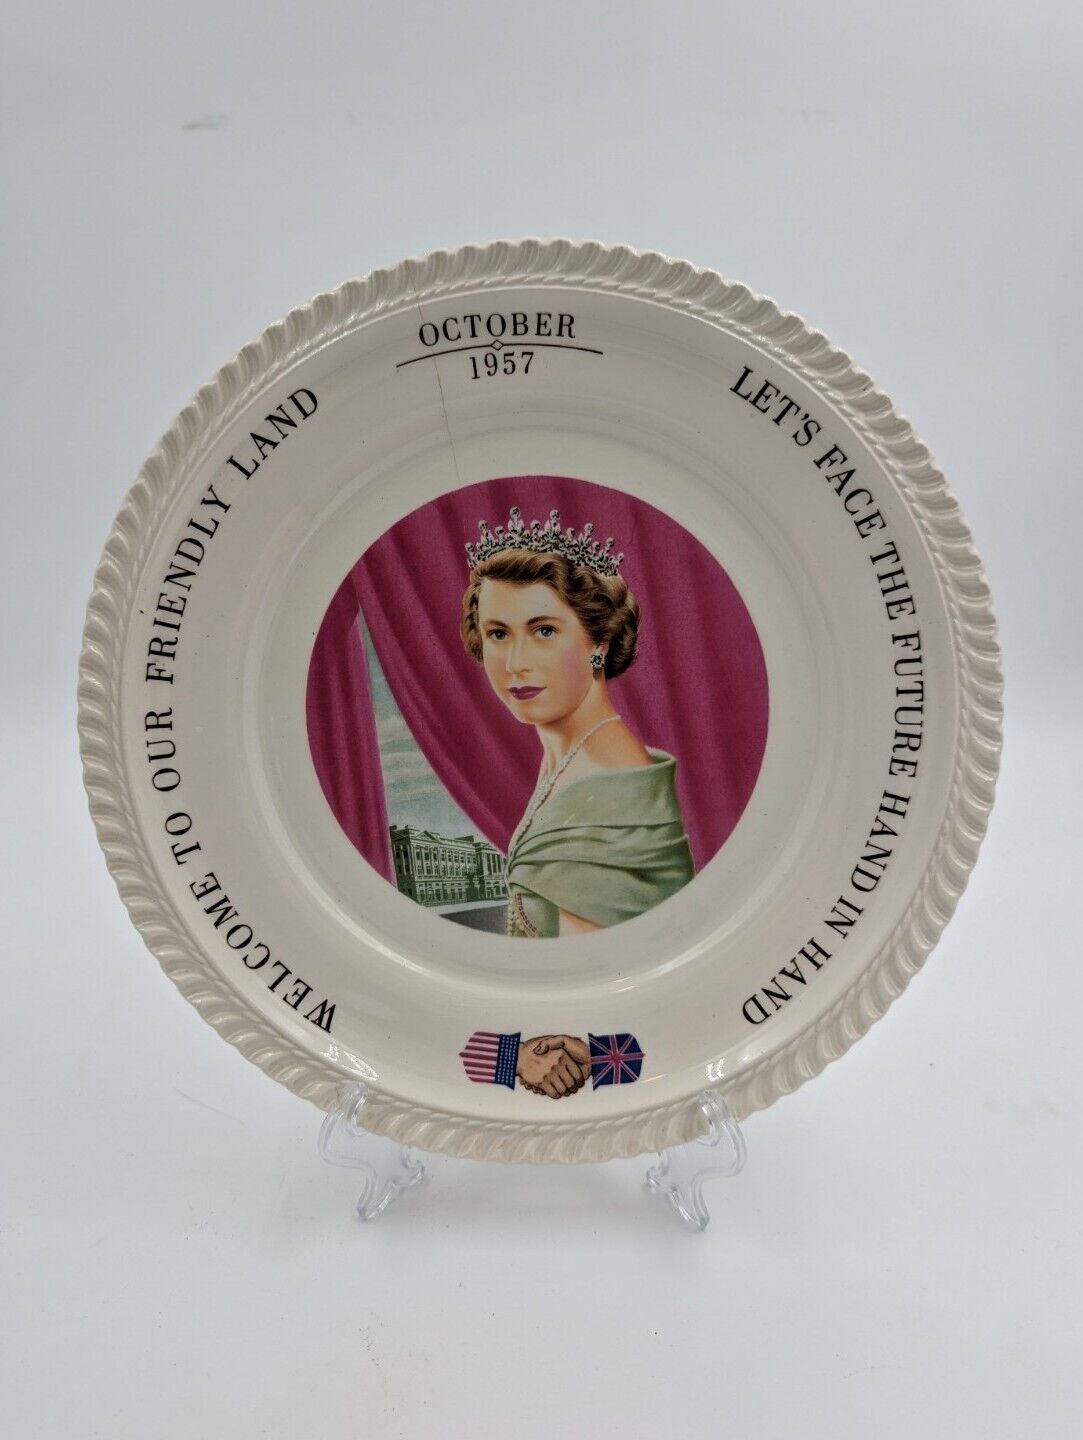 Queen Elizabeth II Commemorative Plate 1st Royal Visit to USA October 1957